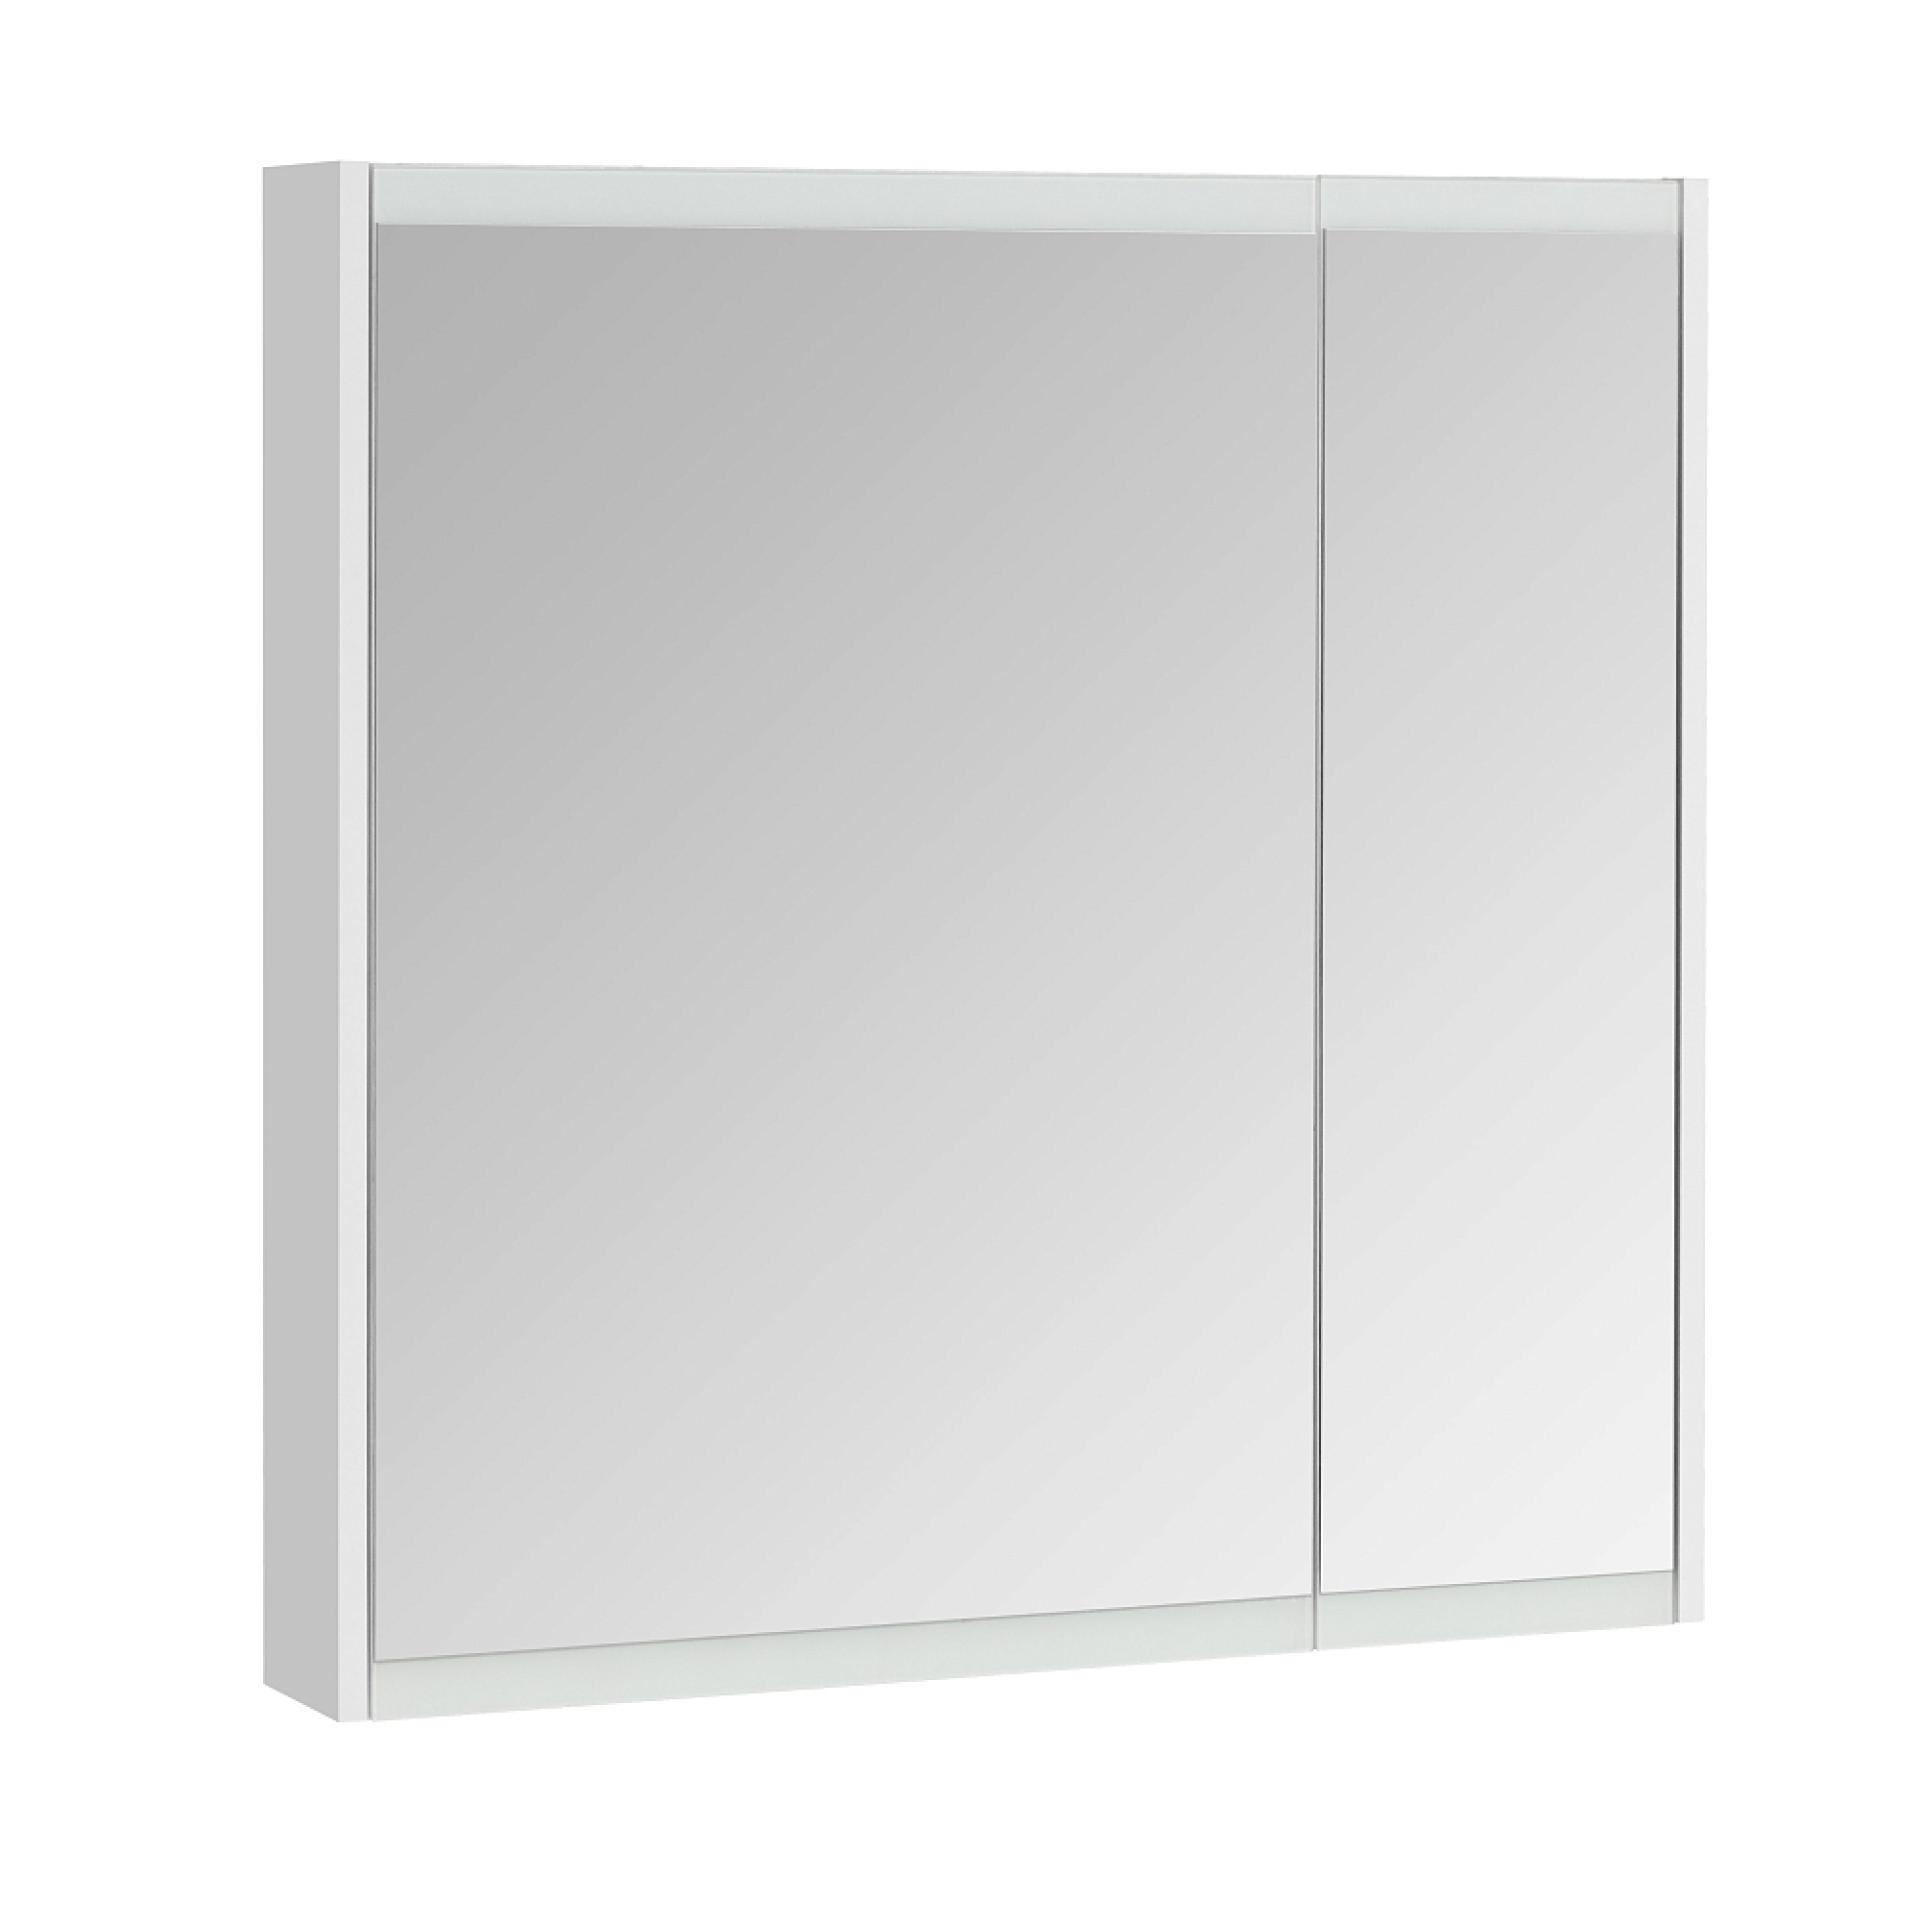 Зеркало-шкаф Aquaton Нортон 80 1A249202NT010, белый глянцевый